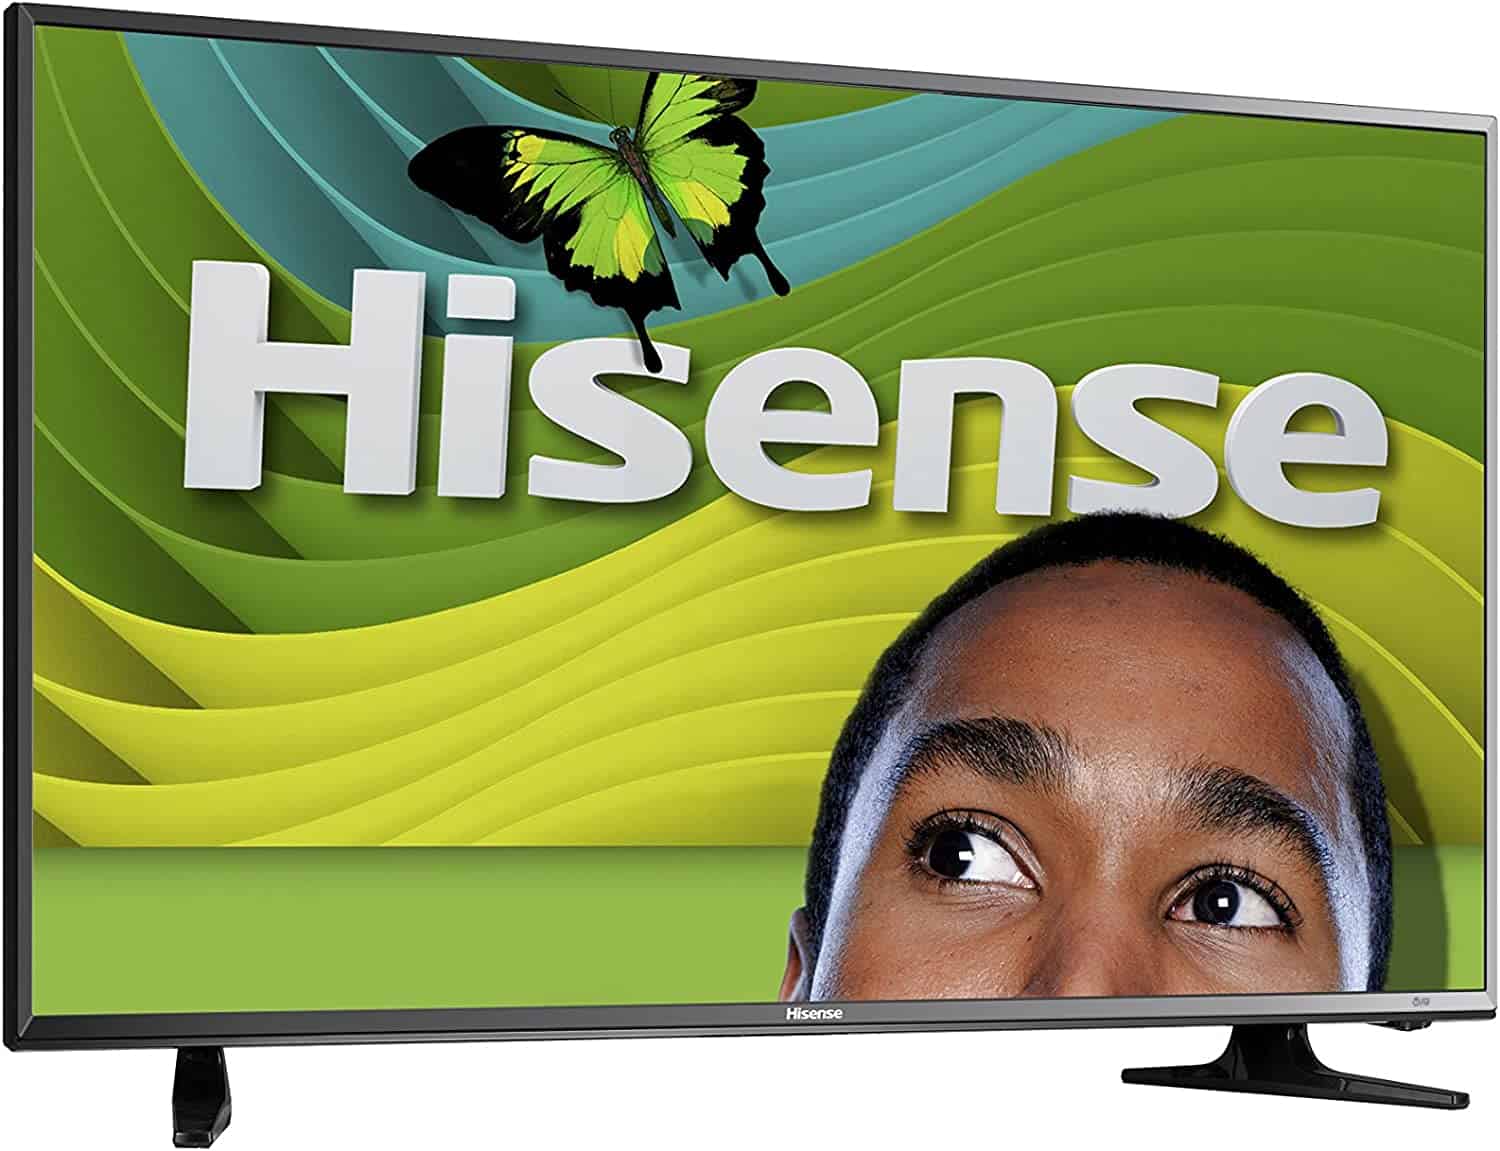 Hisense 32H3B1 32inch TV Review